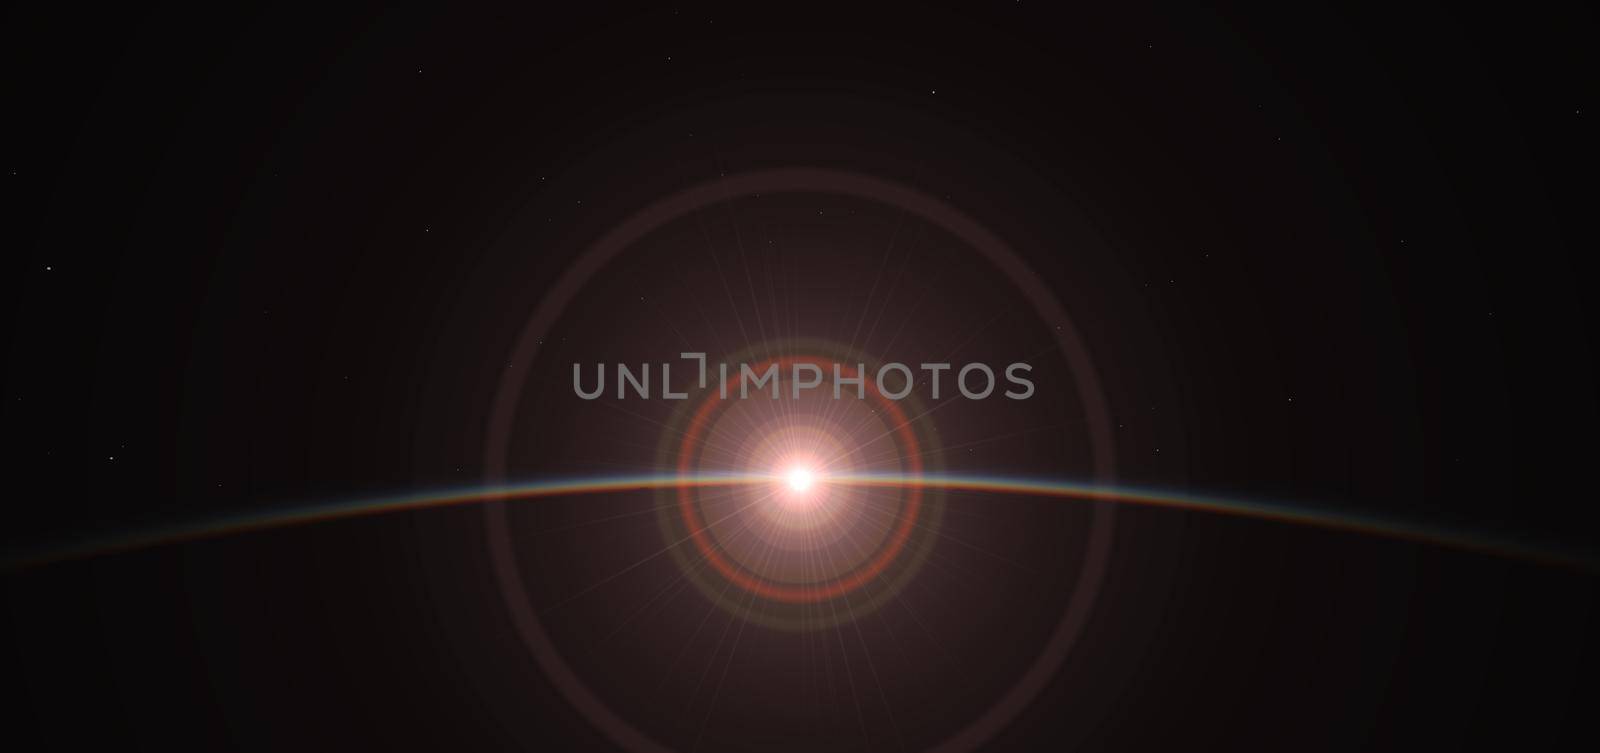 sunrise from planet orbit 3d illustration by alex_nako